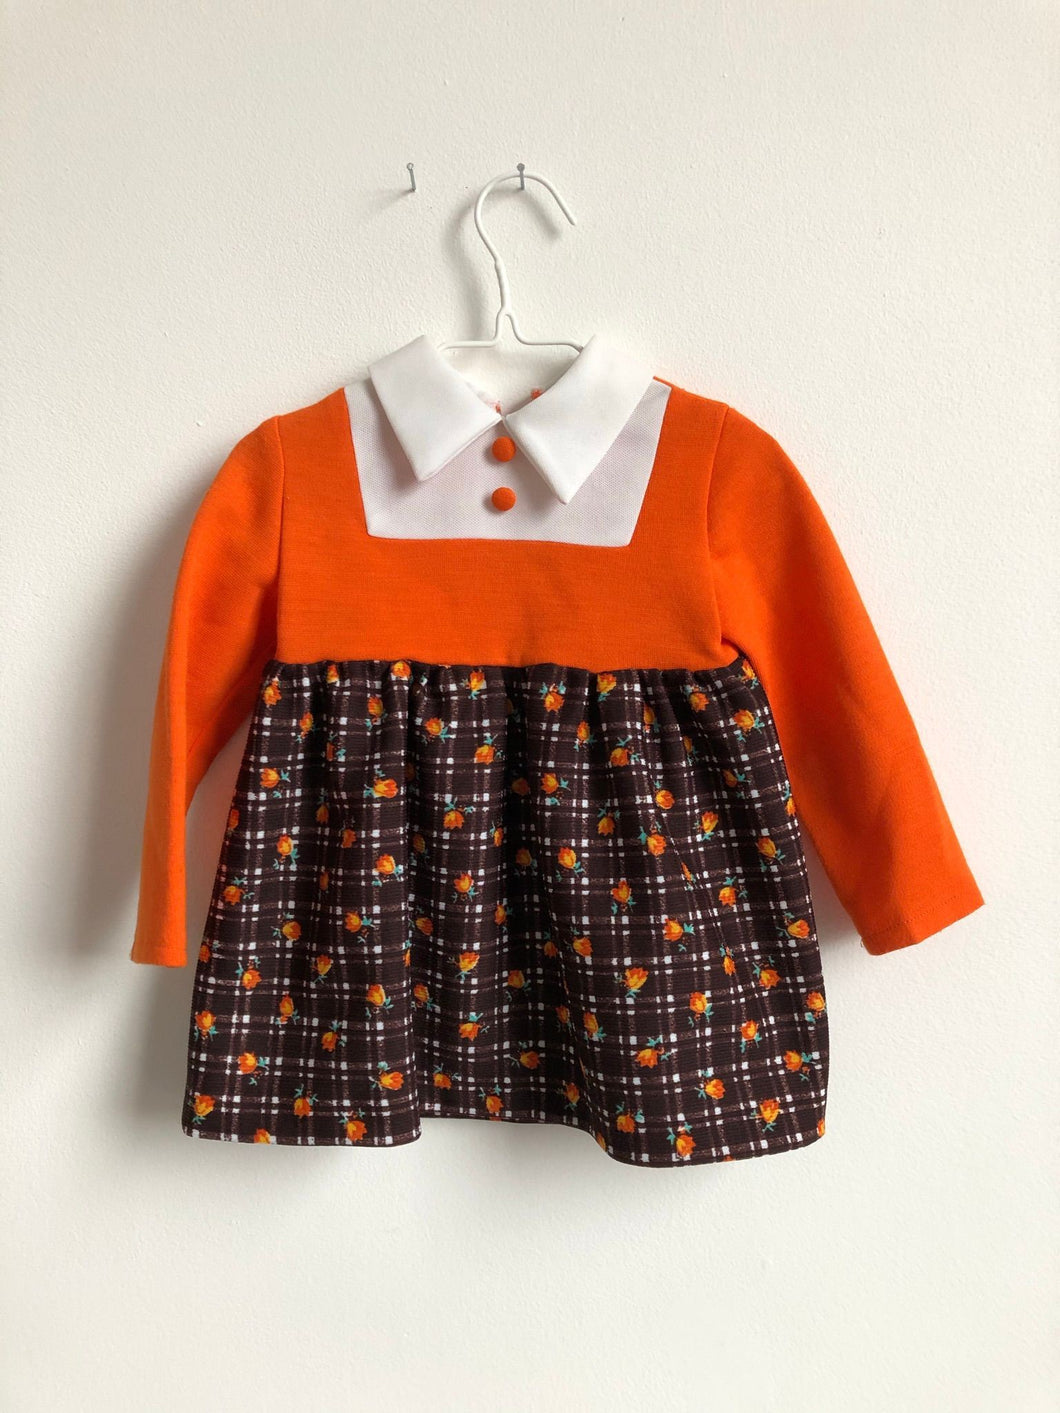 Vintage Orange Dress Age 12-18 Months